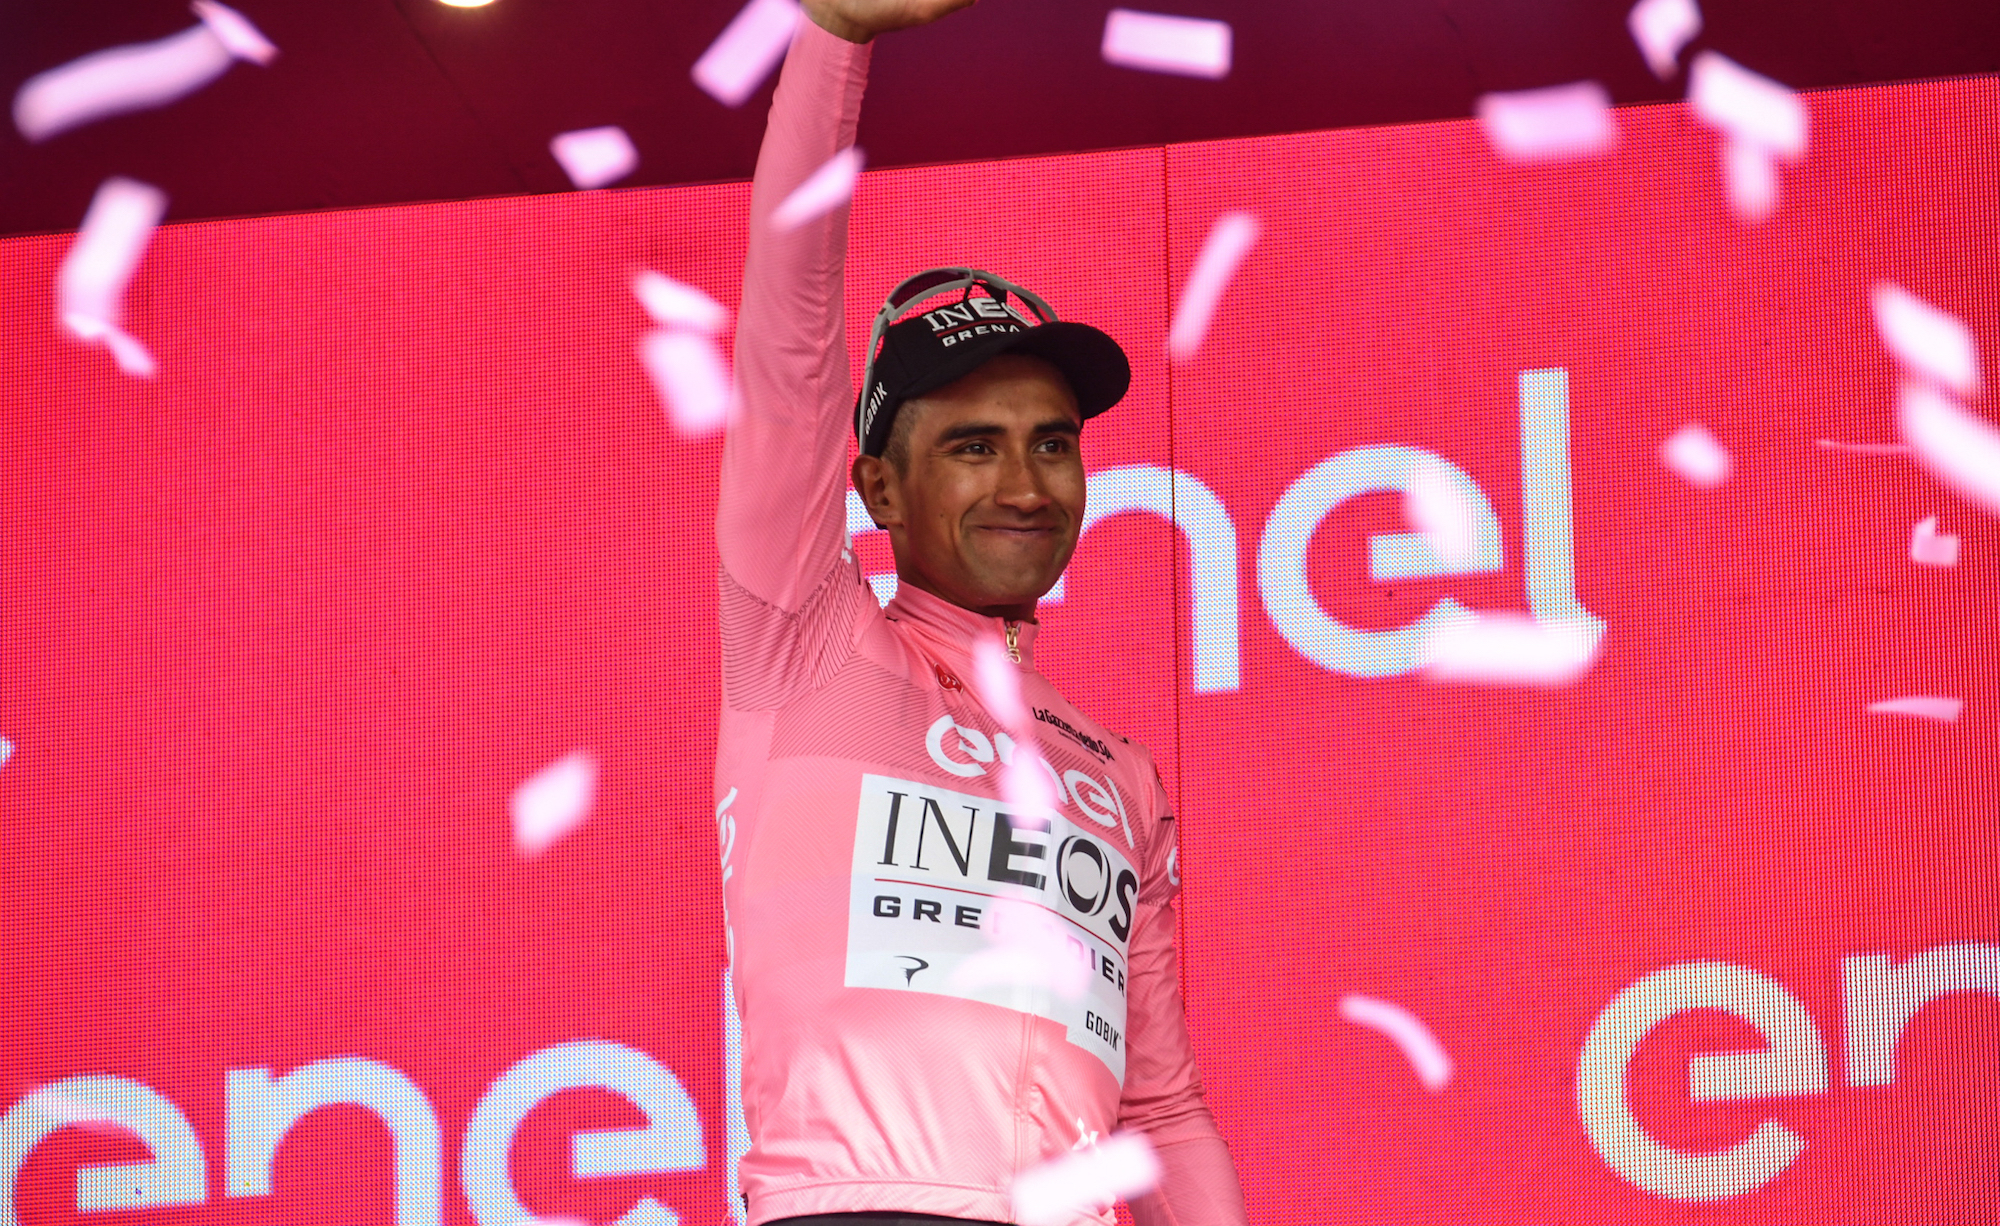 Jhonathan Narvaez Giro d'Italia